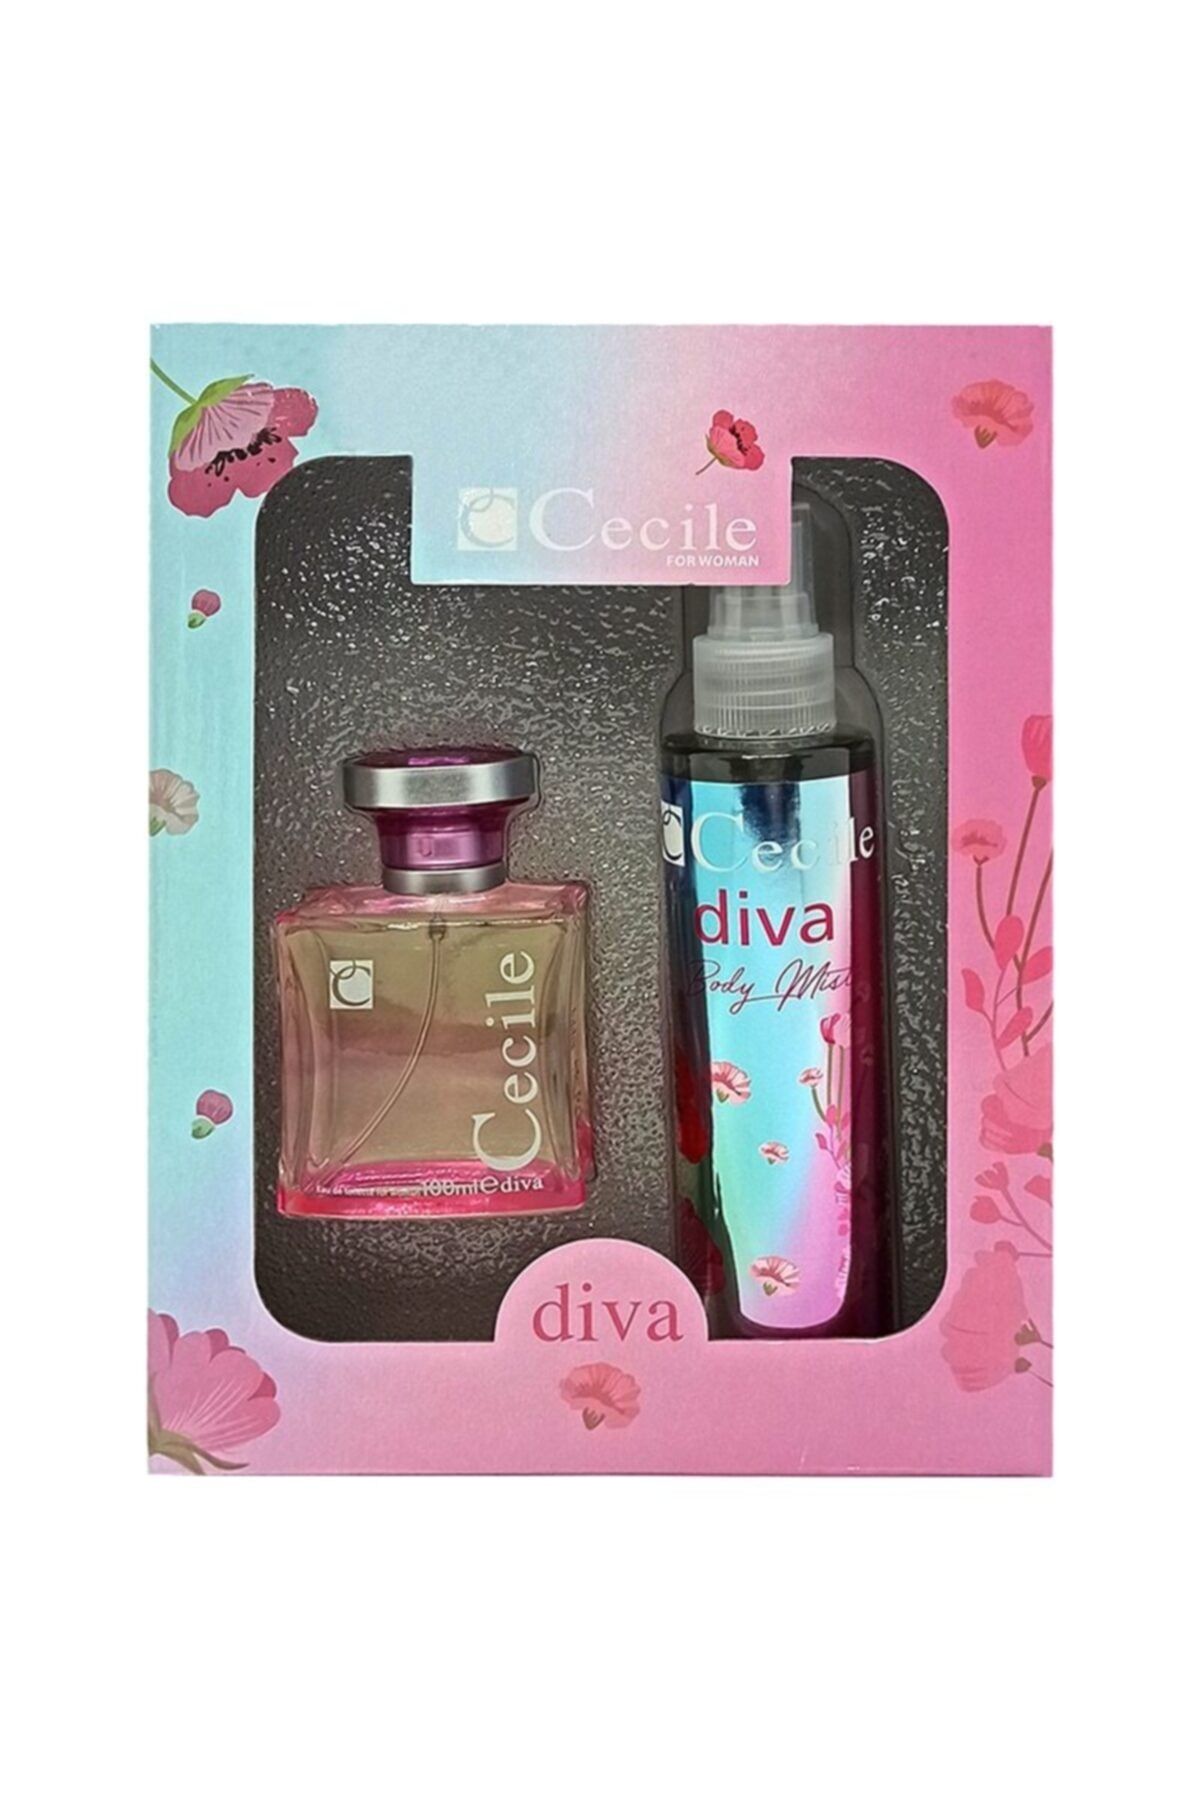 Cecile Diva Edt 100 ml Kadın Parfüm + Body Mist Deodorant 150 ml Set 10329924-0